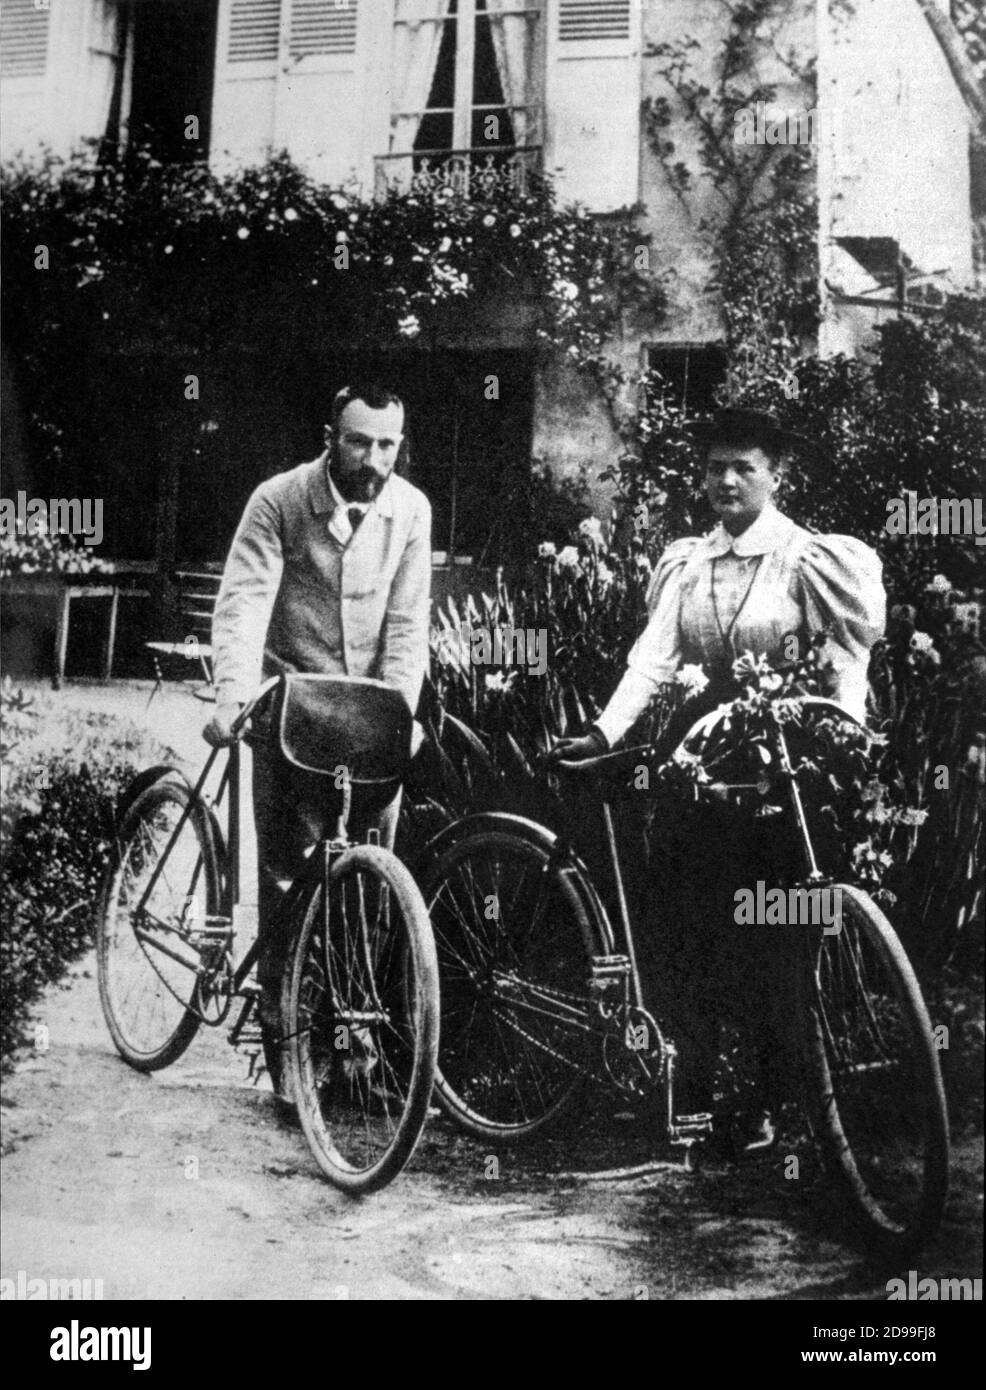 1895 , Sceaux , France : Pierre  CURIE ( Paris , 1859 - 1906 ) and his wife Marie CURIE Sklodowska ( Varsavia , Poland 1867 - Sancellemoz , Sallanches , Savoie 1934 ) , celebrated physiciens , start the wedding honeymoon travel in bicycle - FISICA - FISICI - SCIENZIATO - SCIENZIATI - PHYSICS  - BICICLETTA - Radioattività - RADIOACTIVITY -----  Archivio GBB Stock Photo